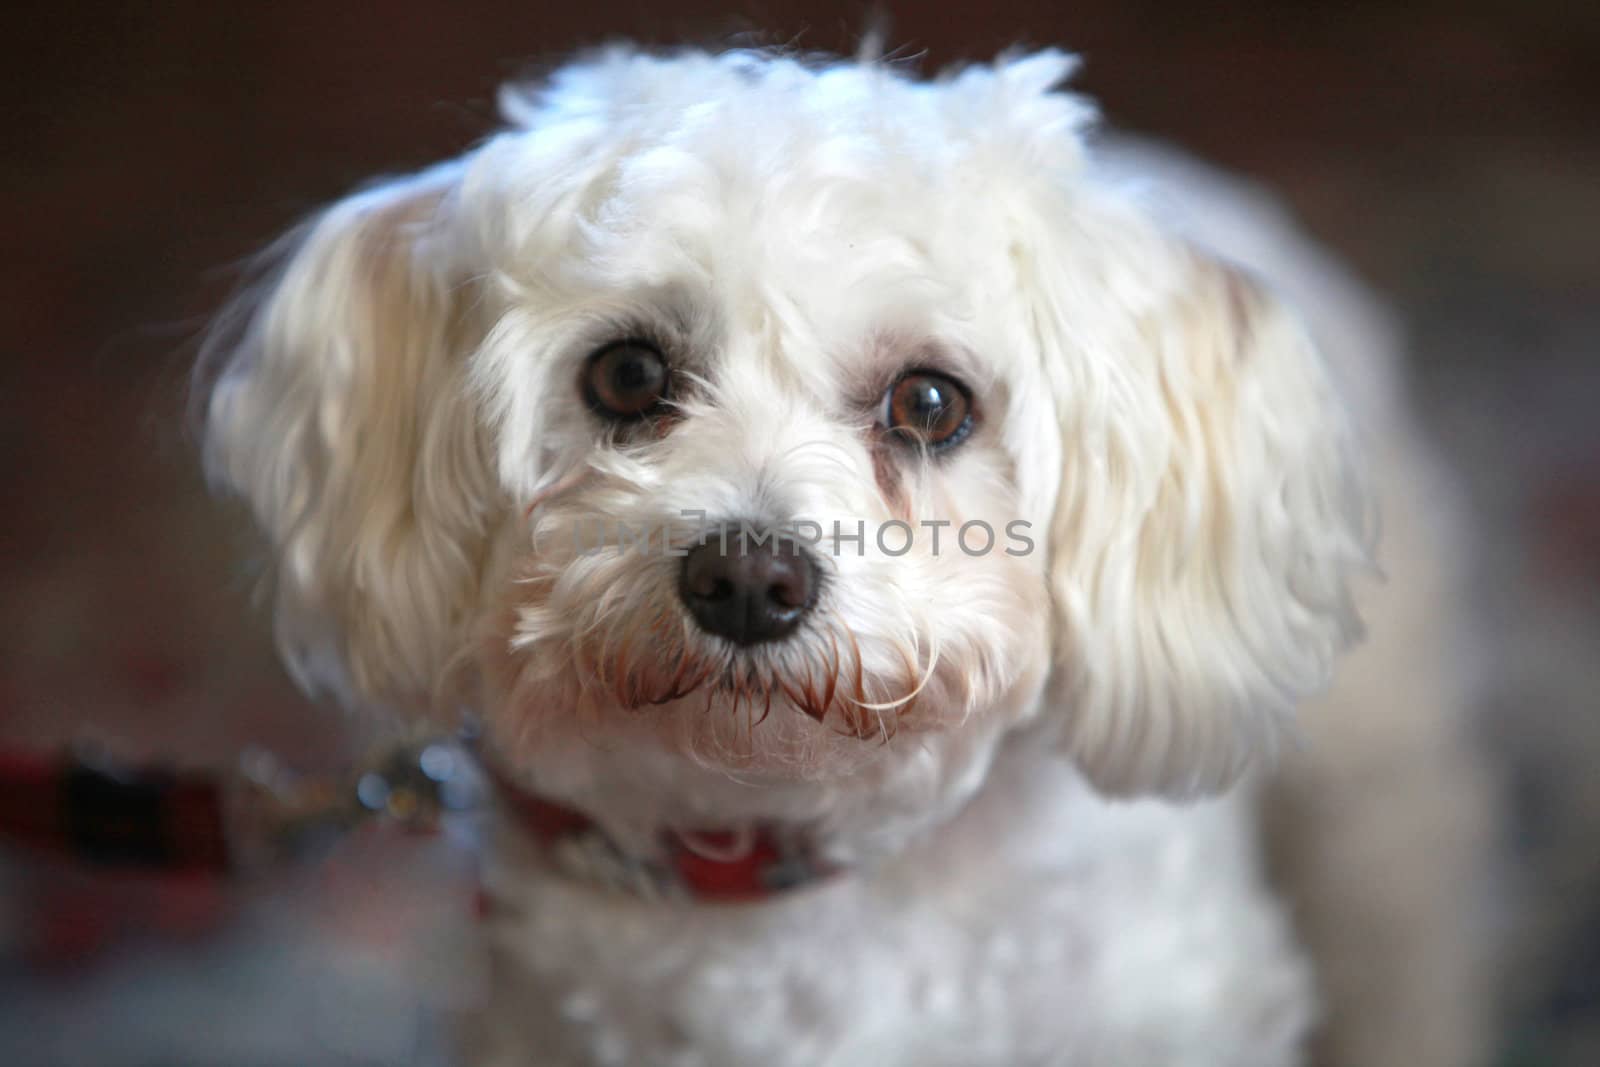 small, cute, white dog looks into the camera by Farina6000